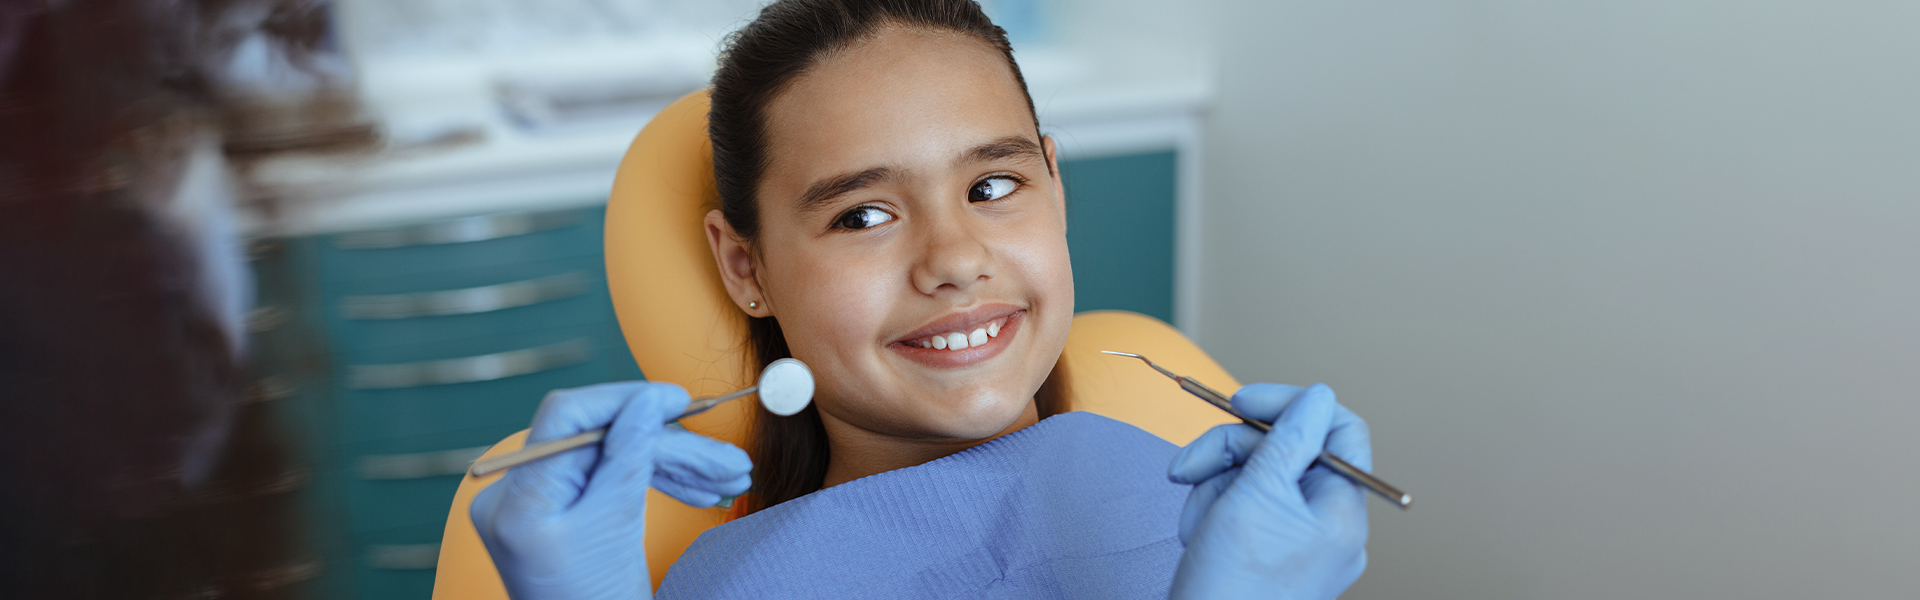 Types of Pediatric Dental Crowns